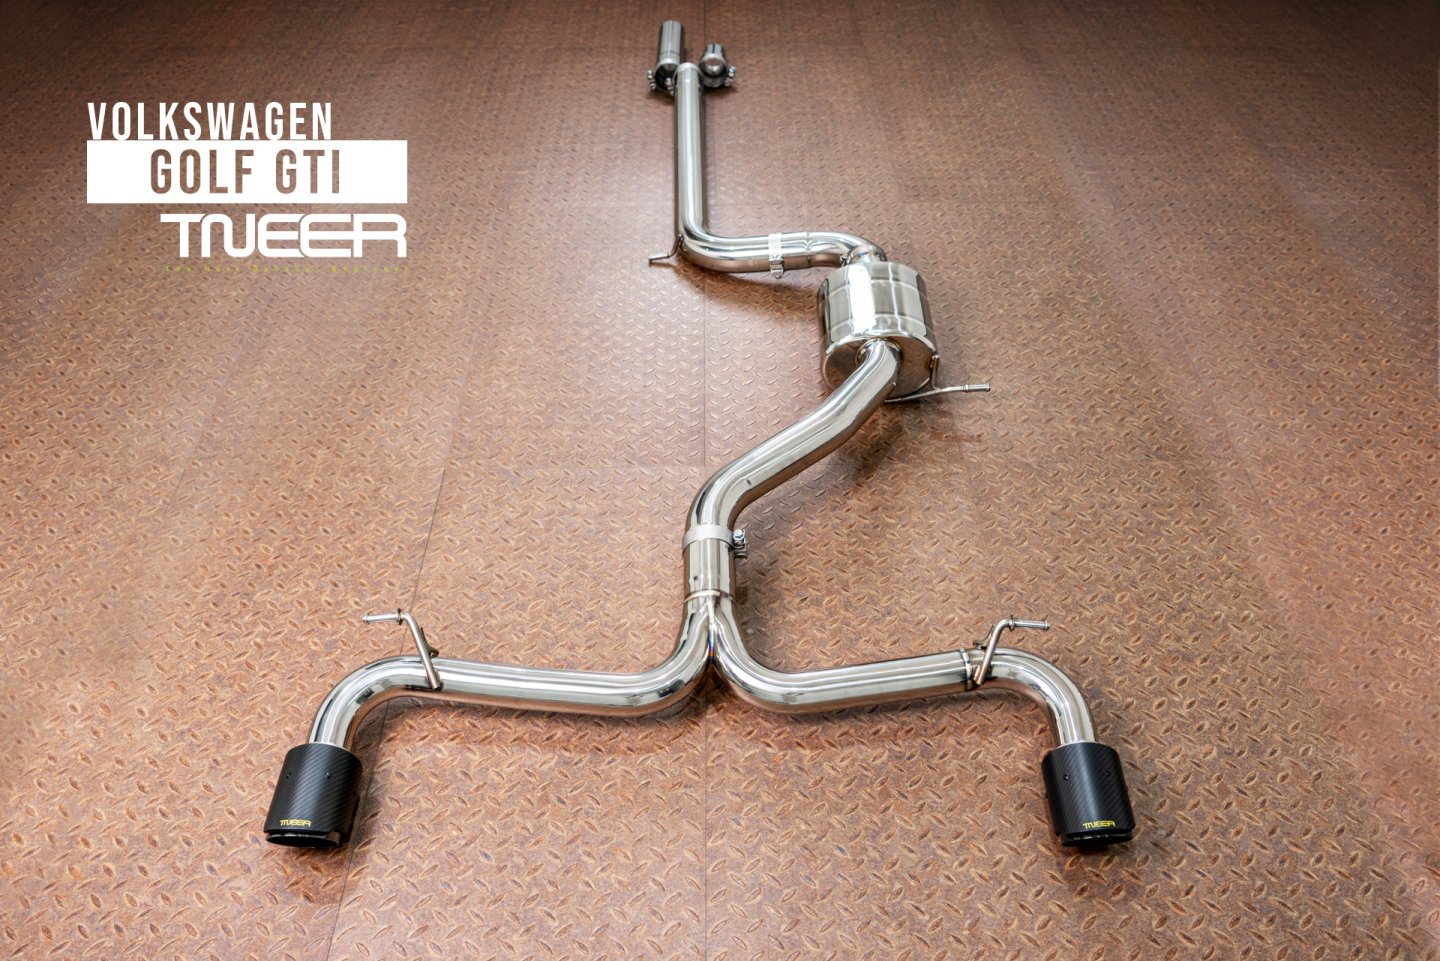 VW Golf GTI MK7.5 TNEER Performance Downpipes